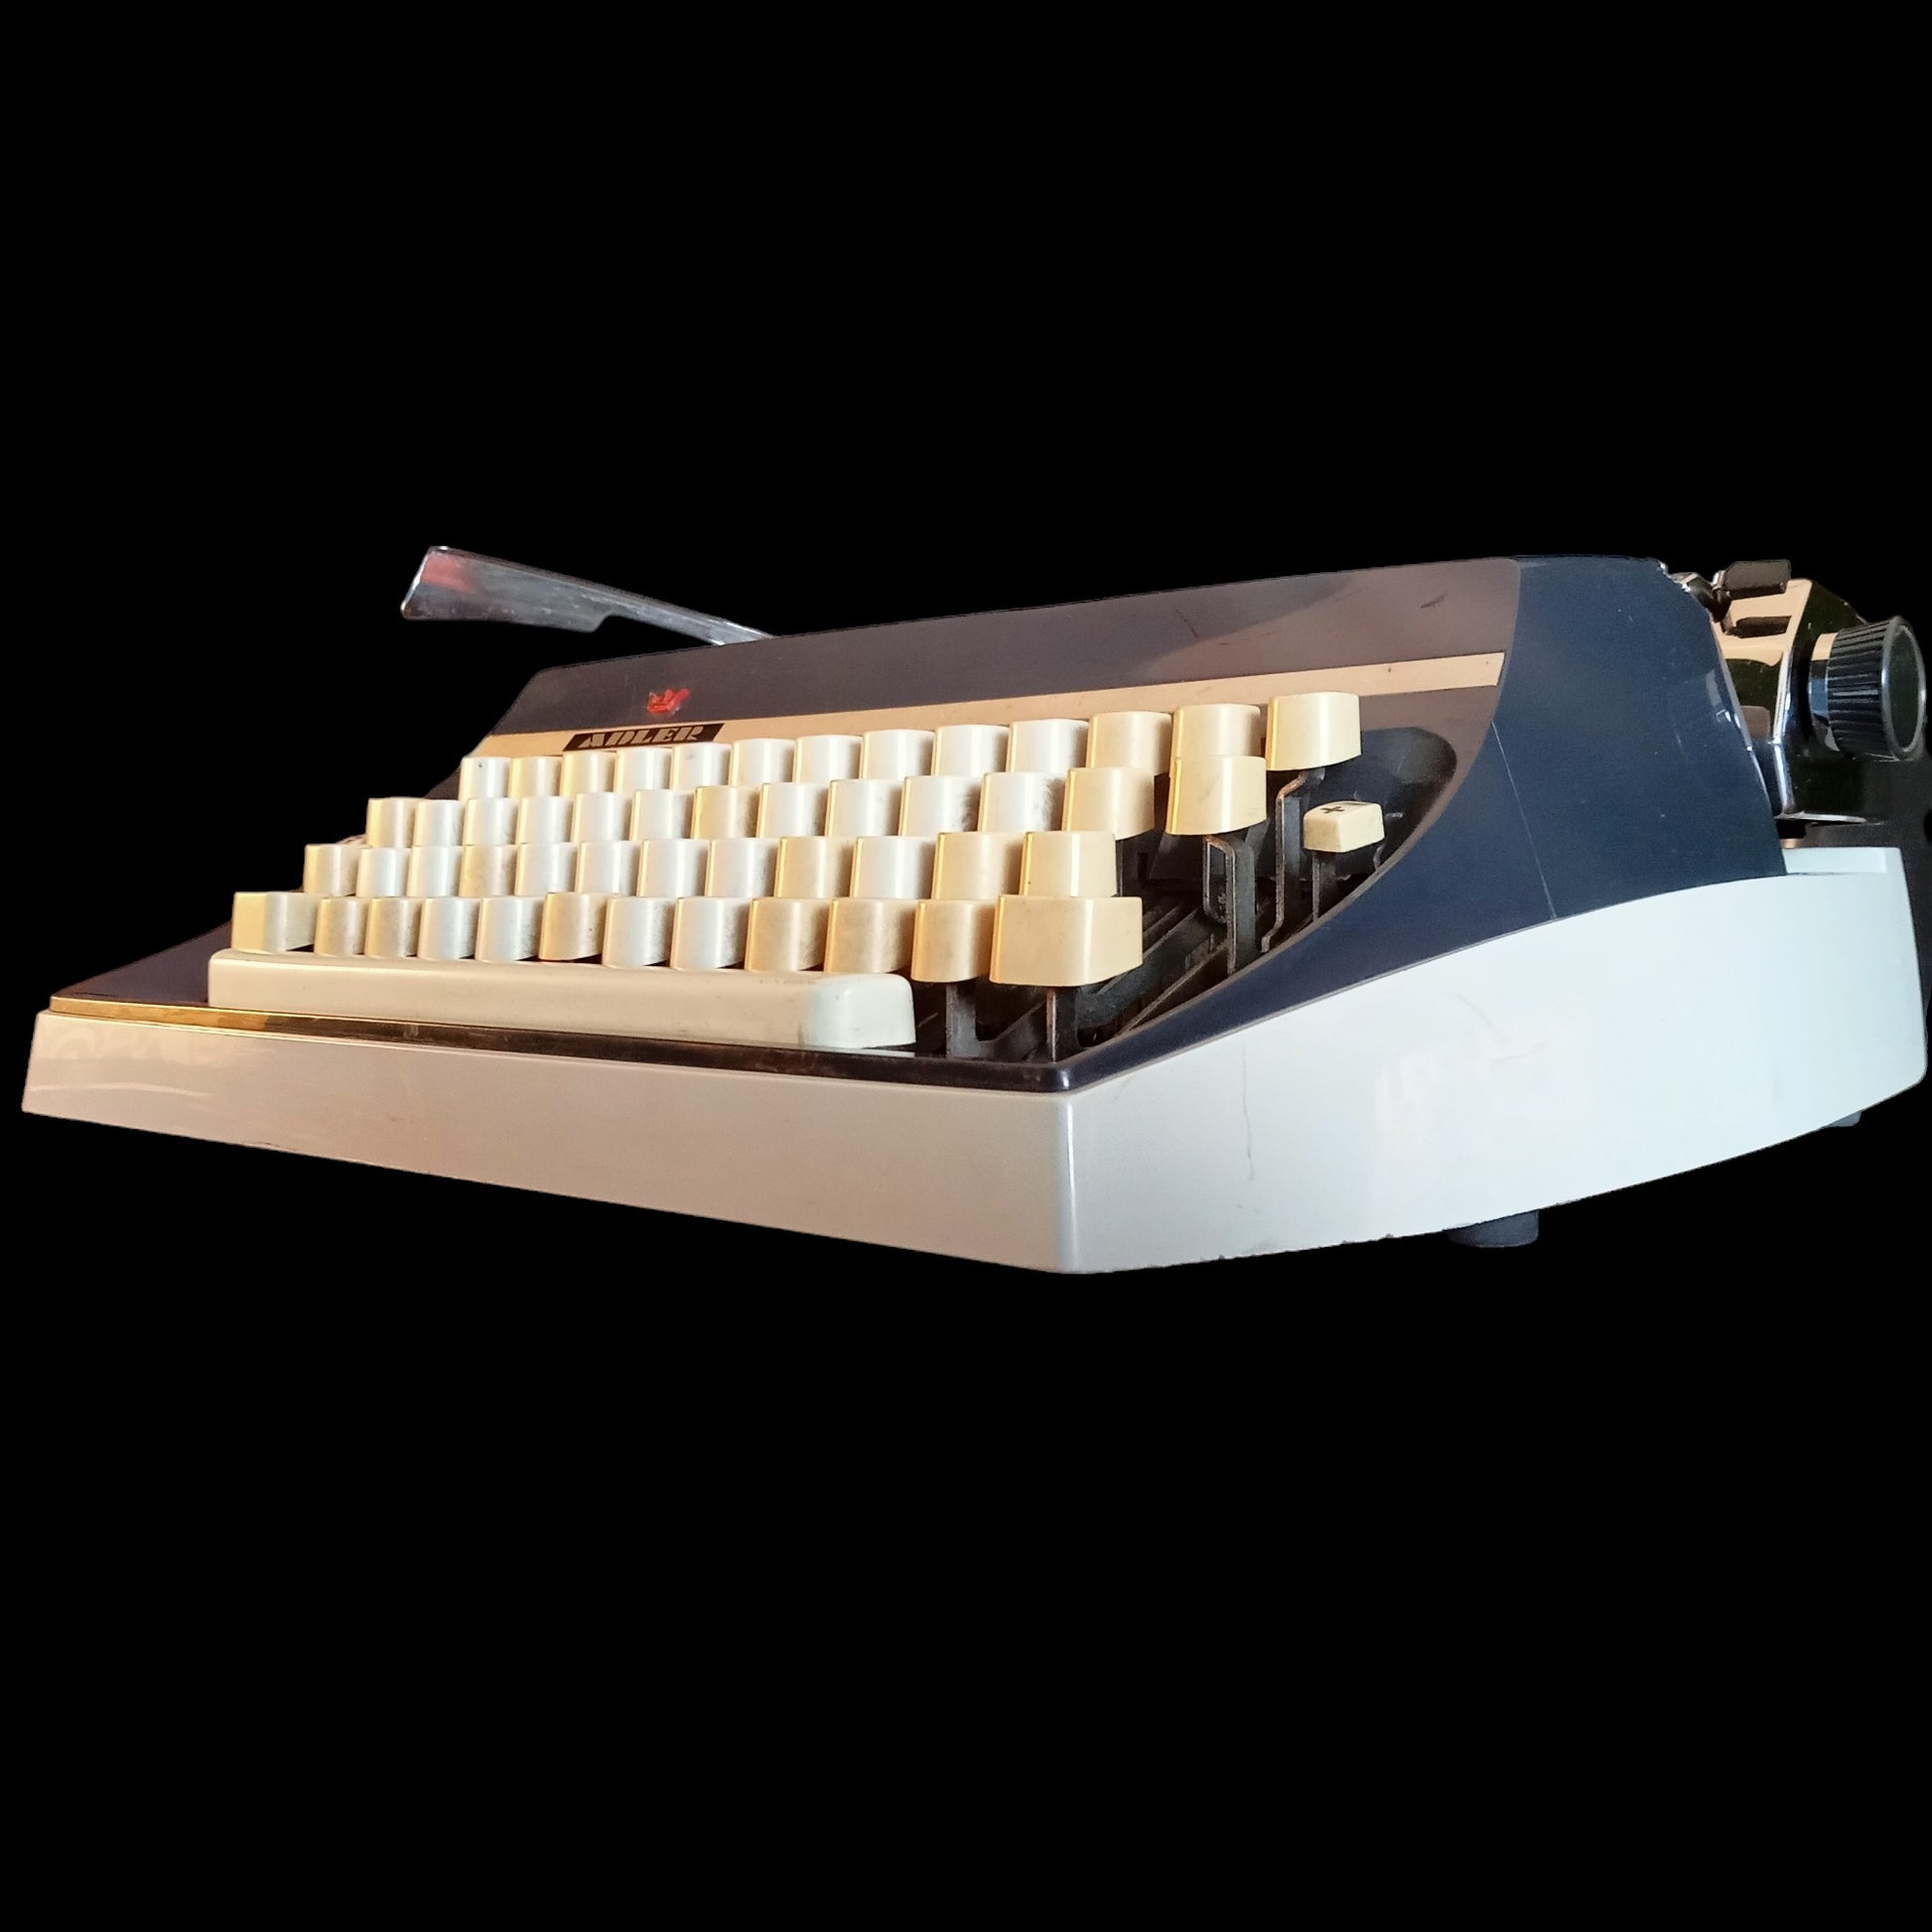 Image of Adler Gabriele 35 Typewriter. Available from universaltypewriterccompany.in